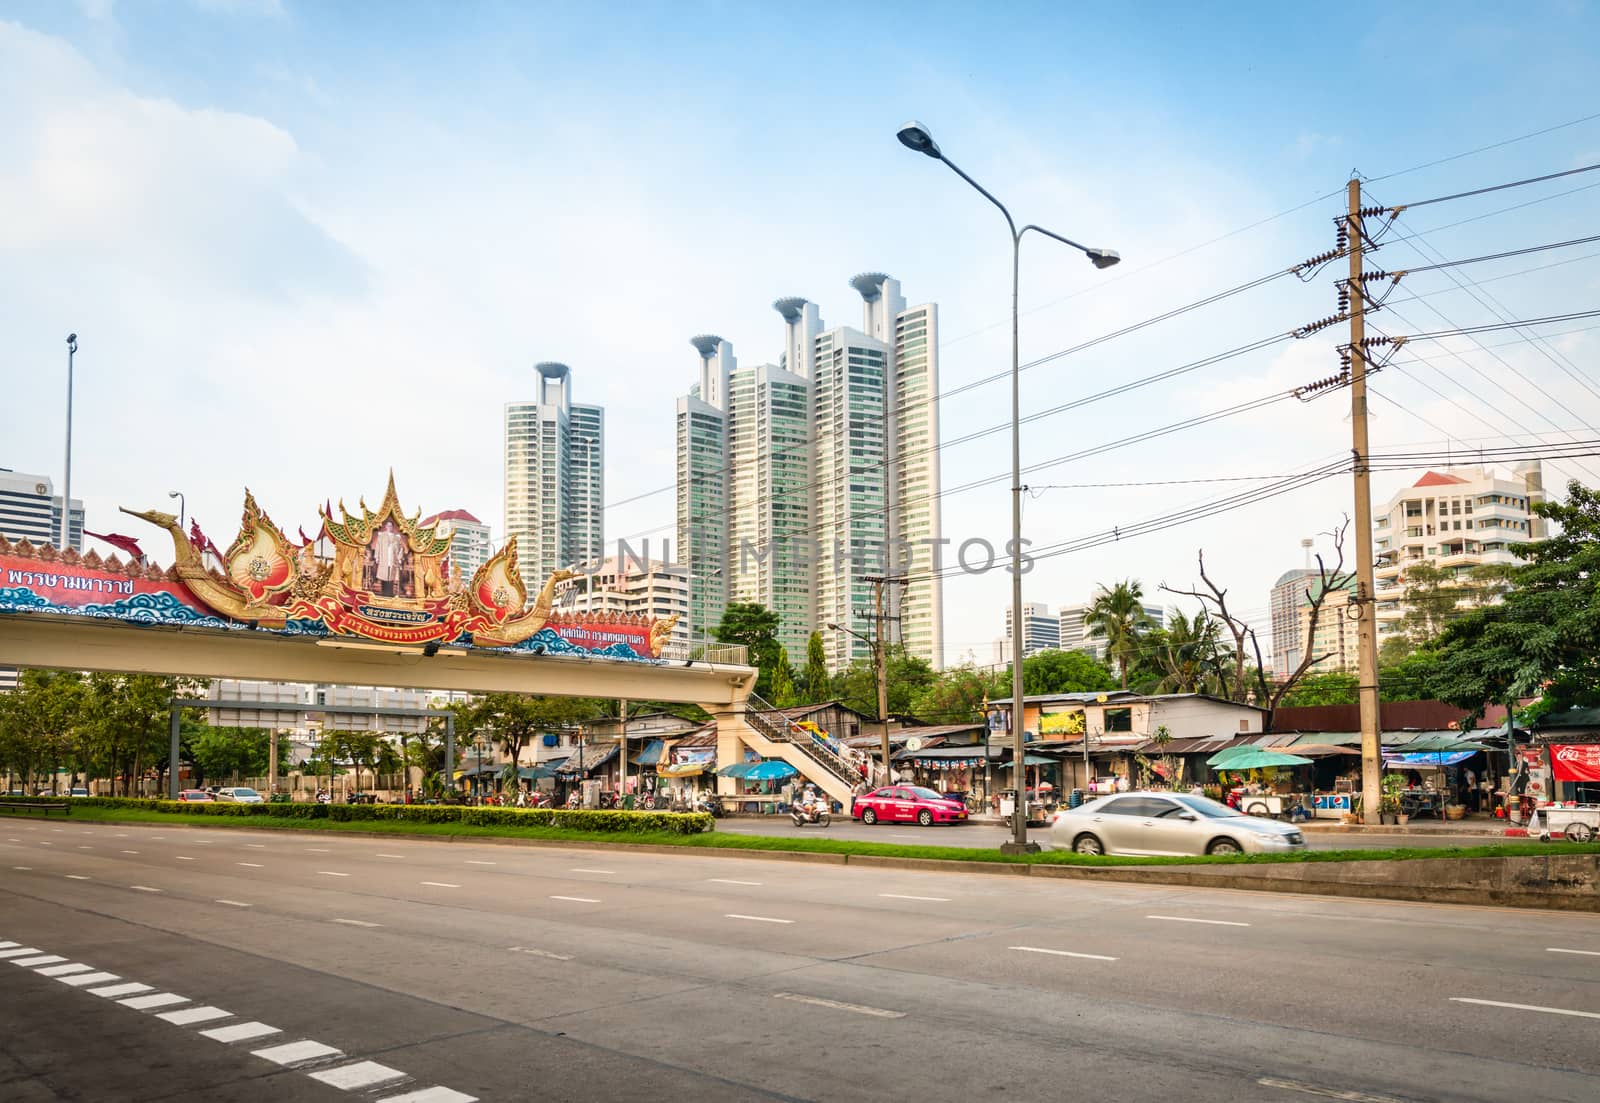 Wide street with portrait of the King of Thailand Bhumibol Aduly by iryna_rasko